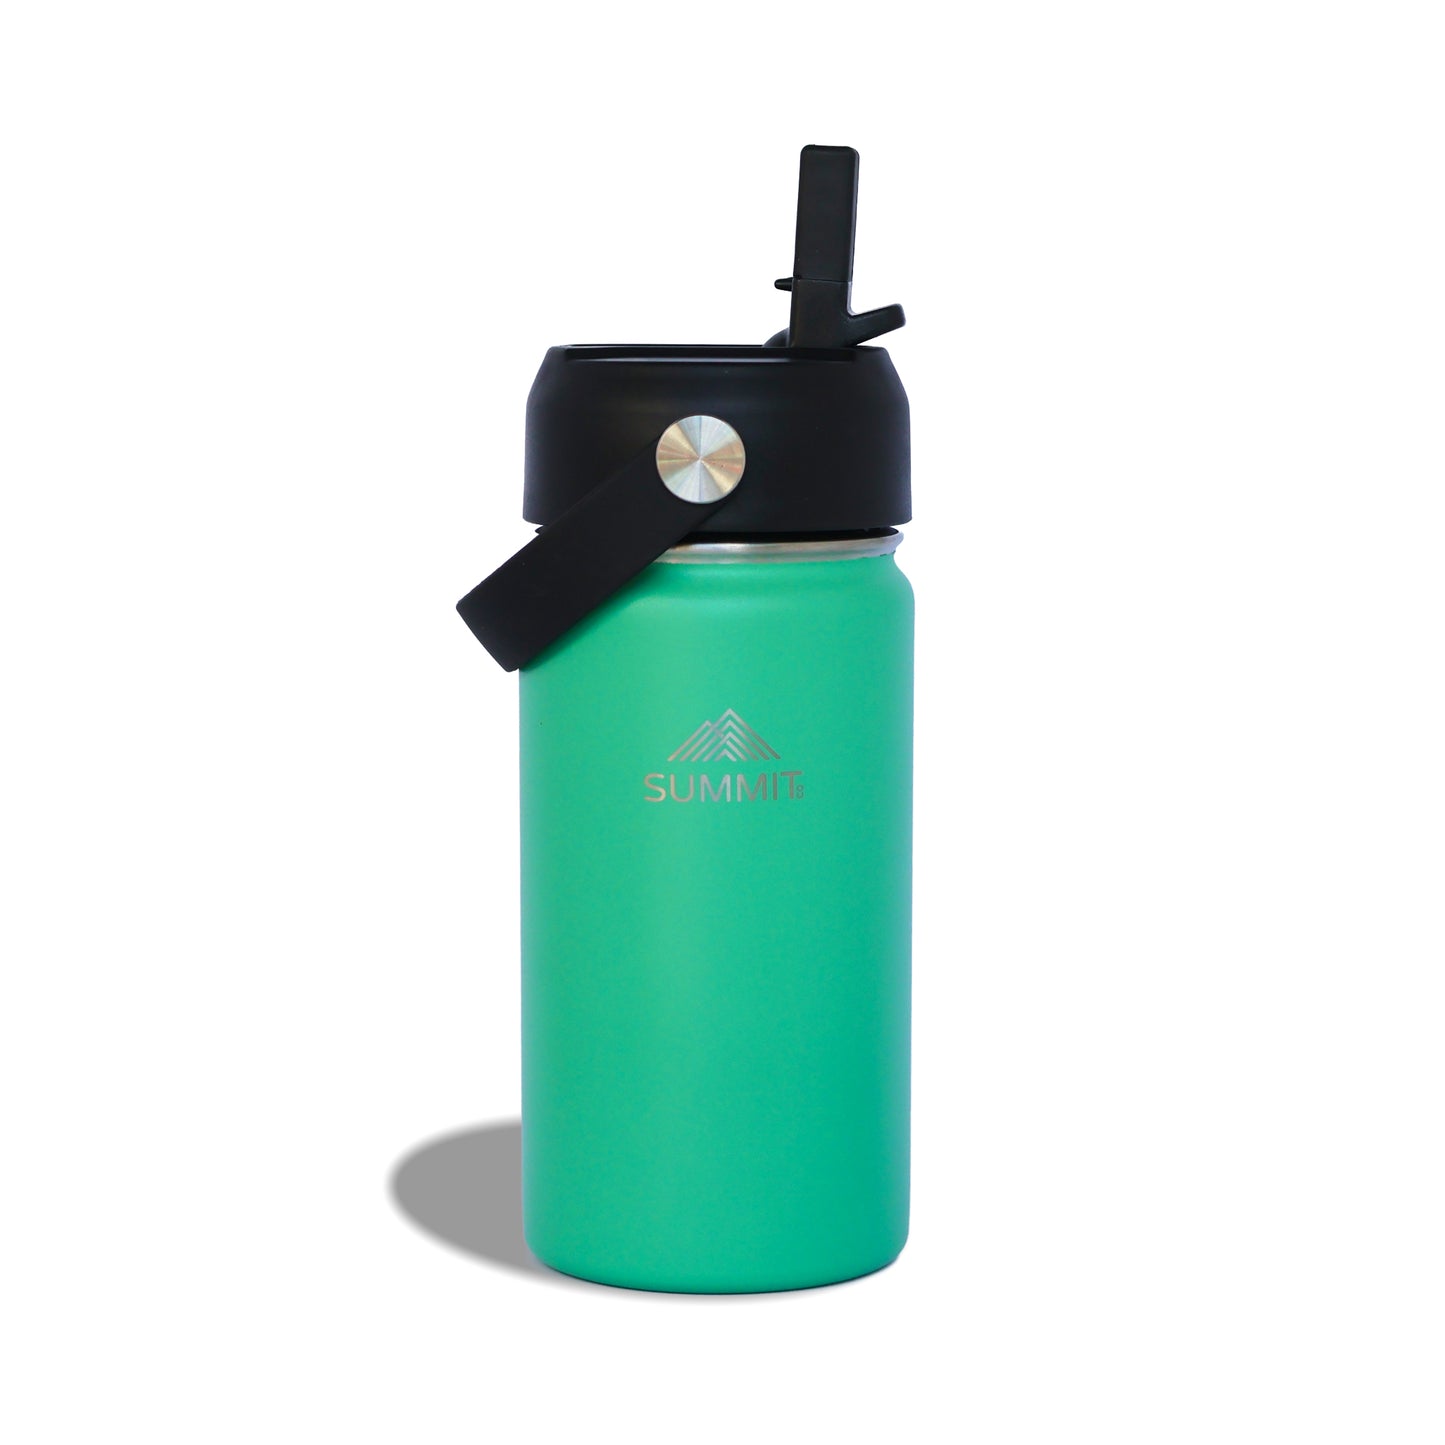 SummitCo Mini 350ml Insulated Bottle - Emerald